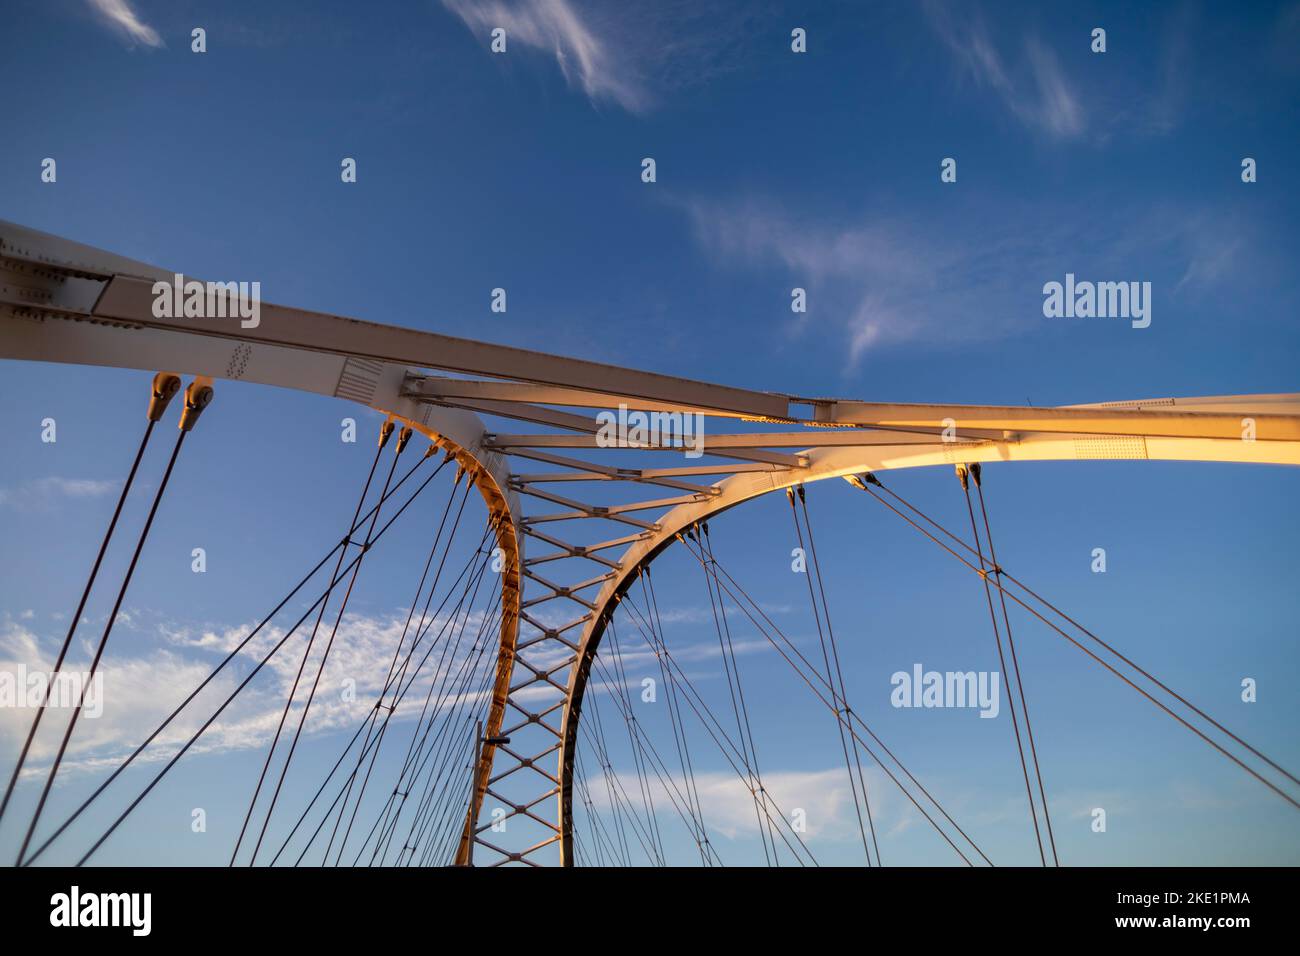 The Broadway Street Bridge spanning over the  Arkansas River, in downtown Little Rock, Arkansas  at sunrise. Stock Photo